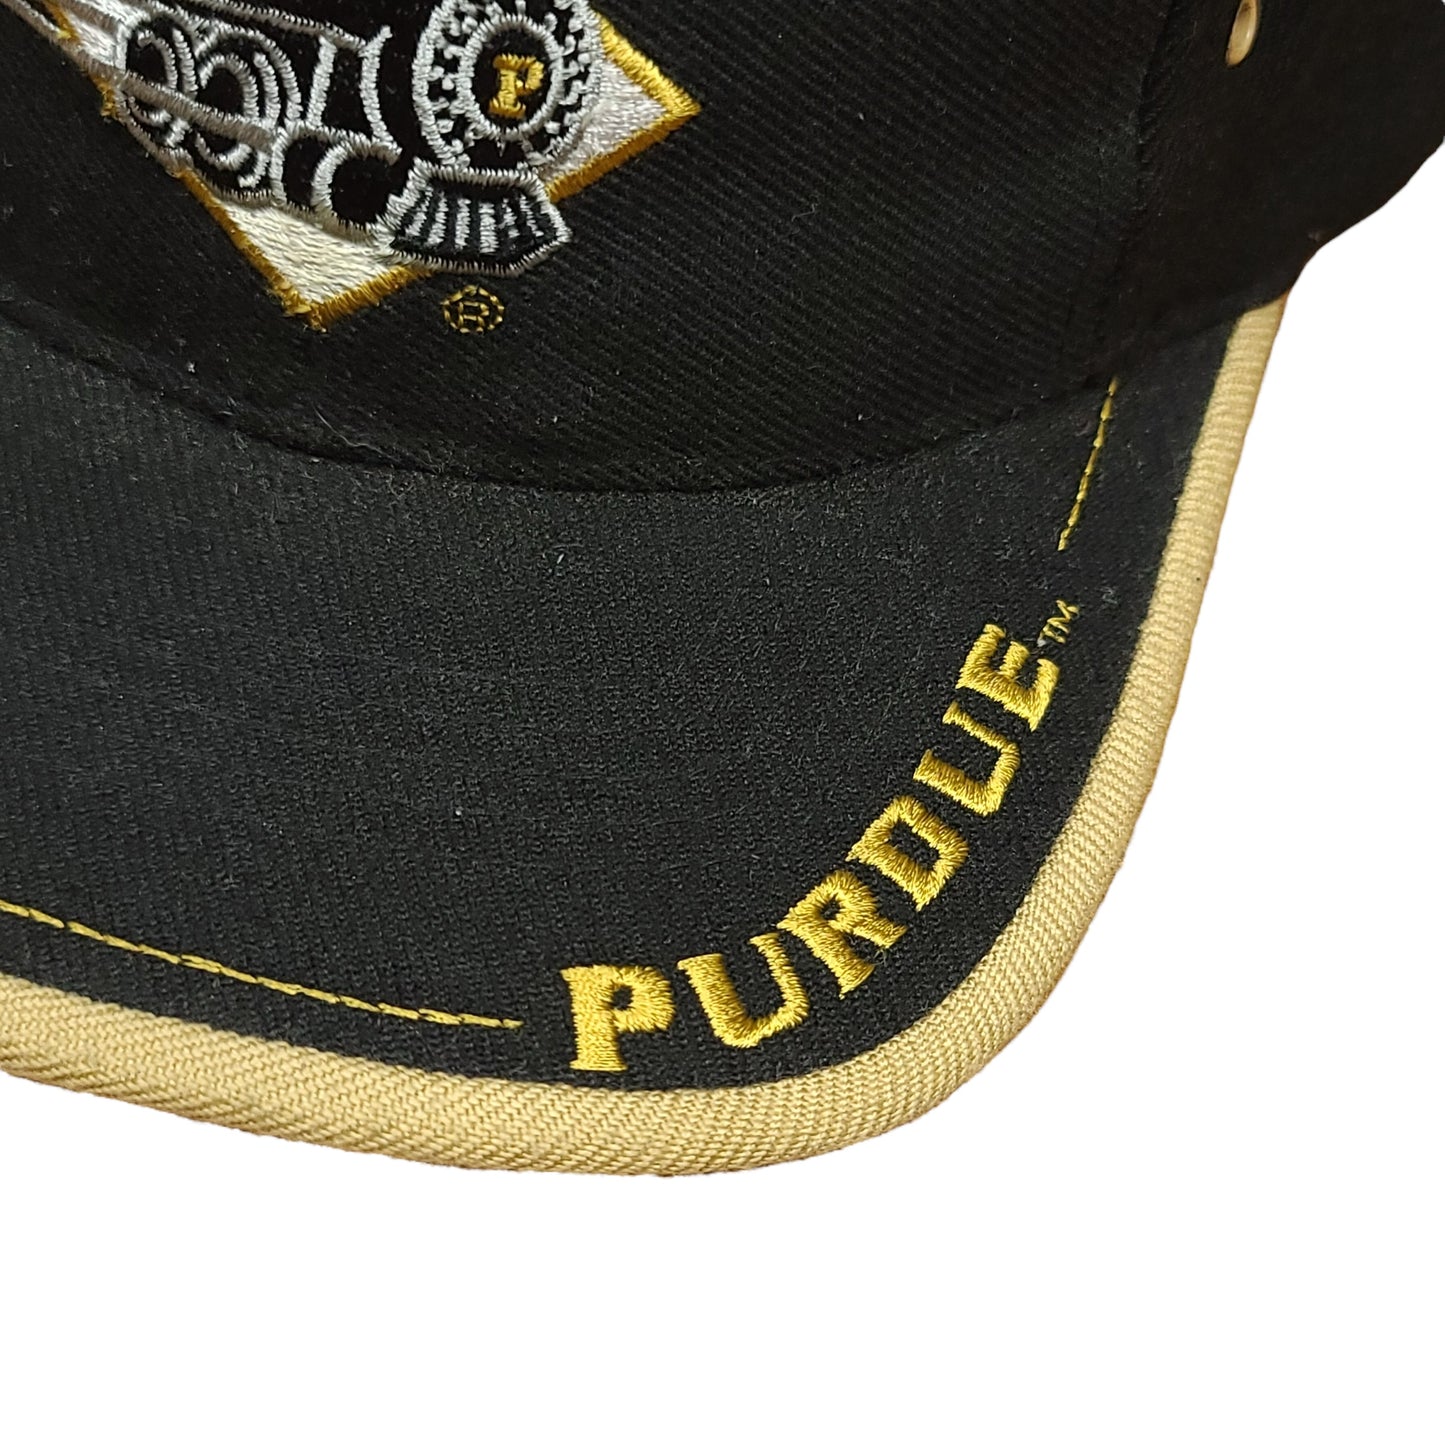 Vintage Purdue University Black & Gold Logo Athletic Strap back Hat